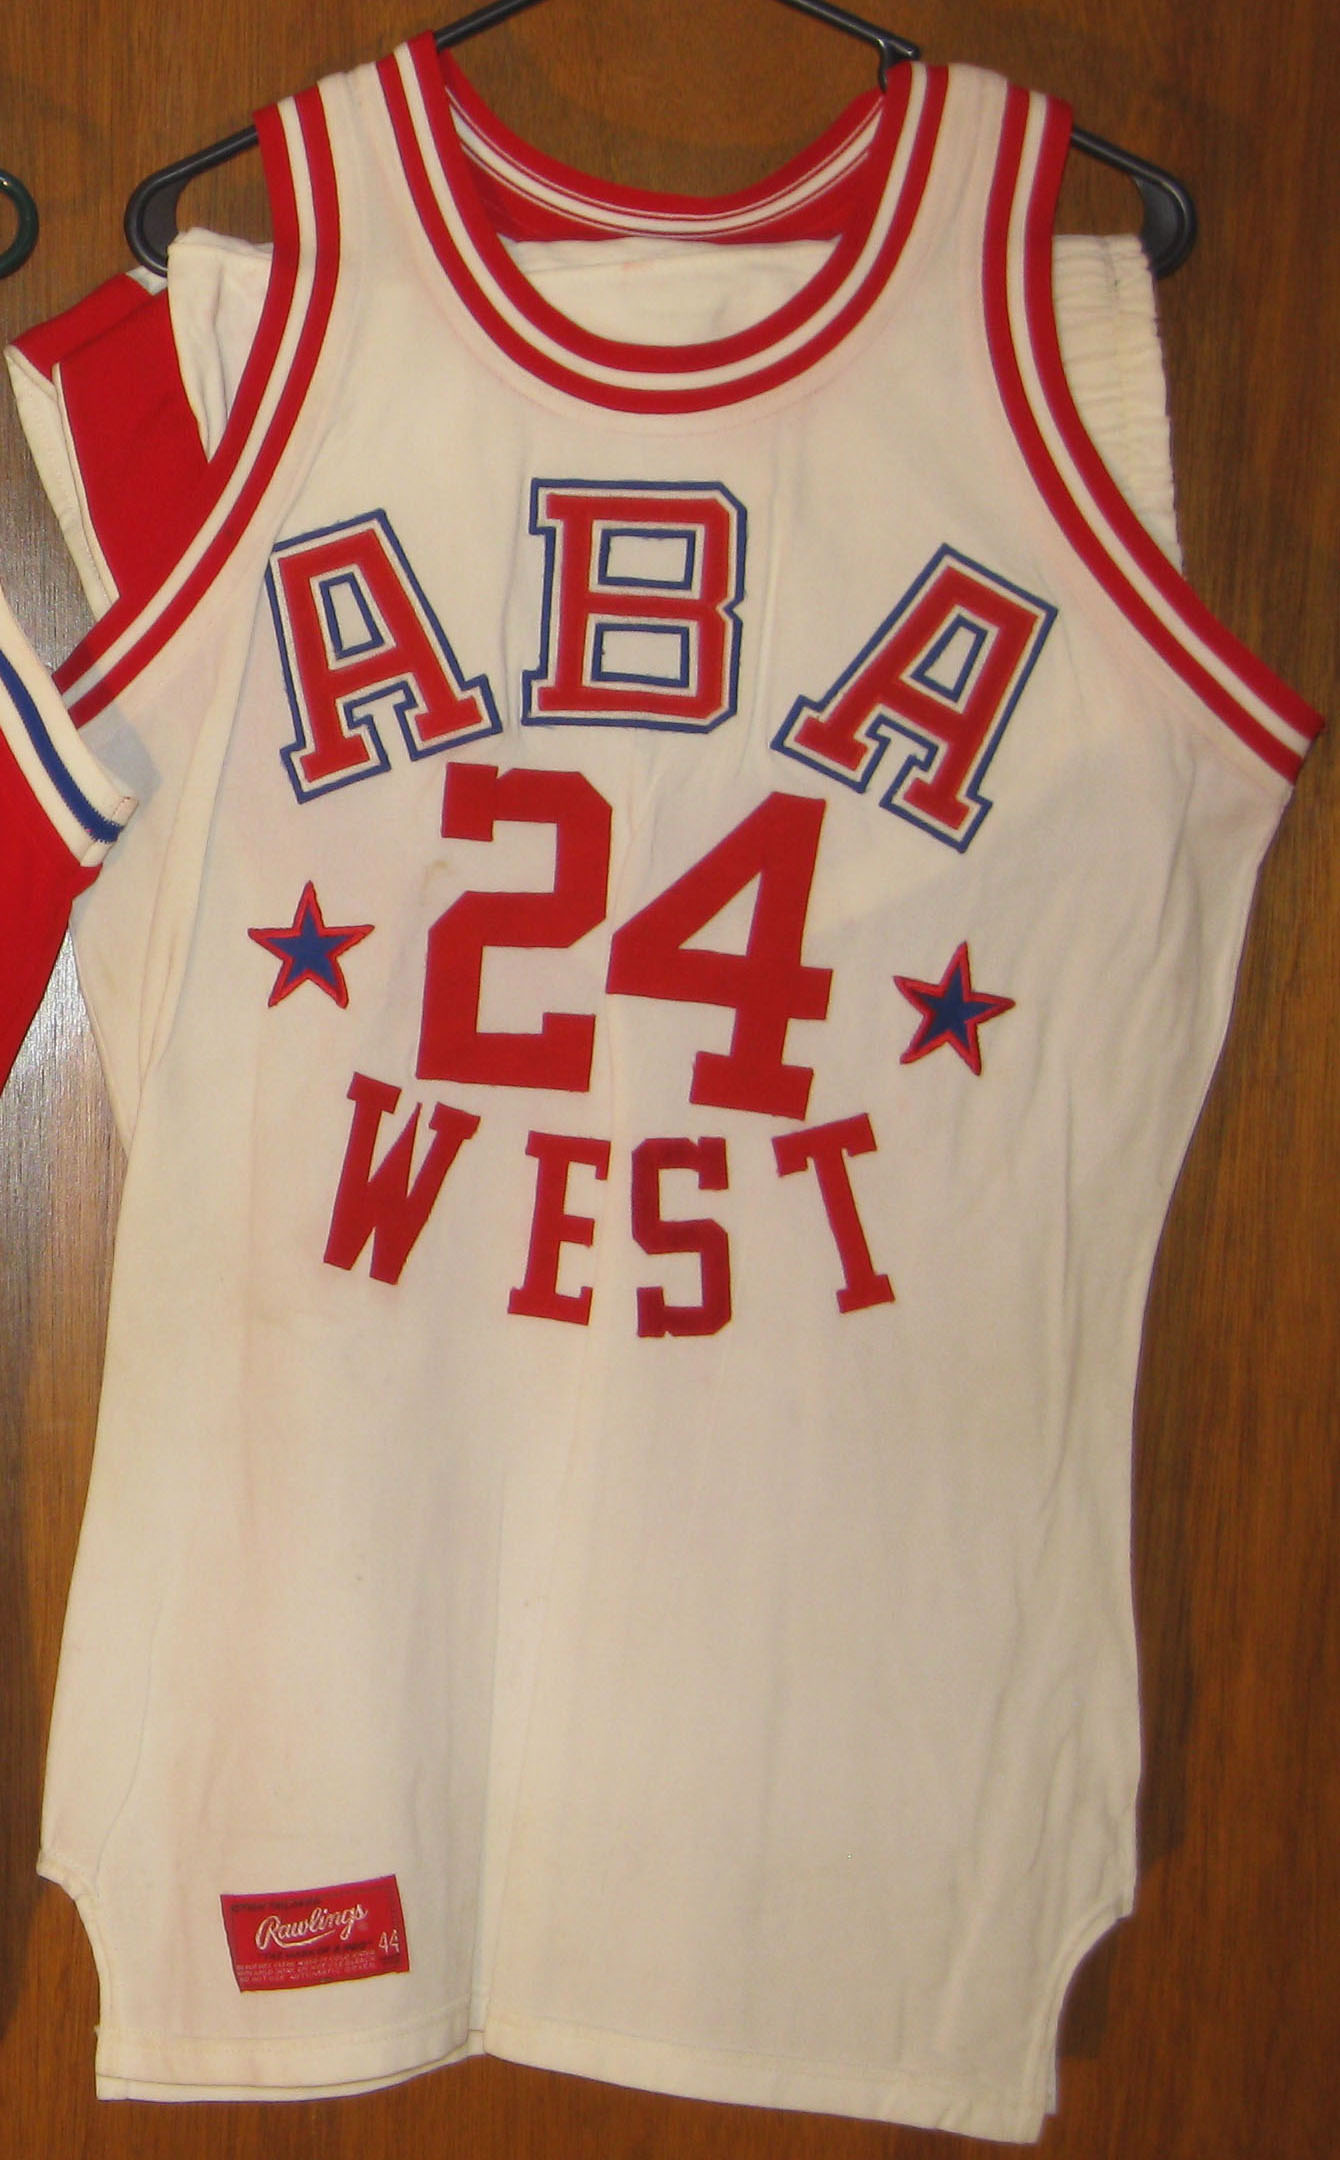 Ron Boone, Utah Stars Jersey, American Basketball Association (ABA)